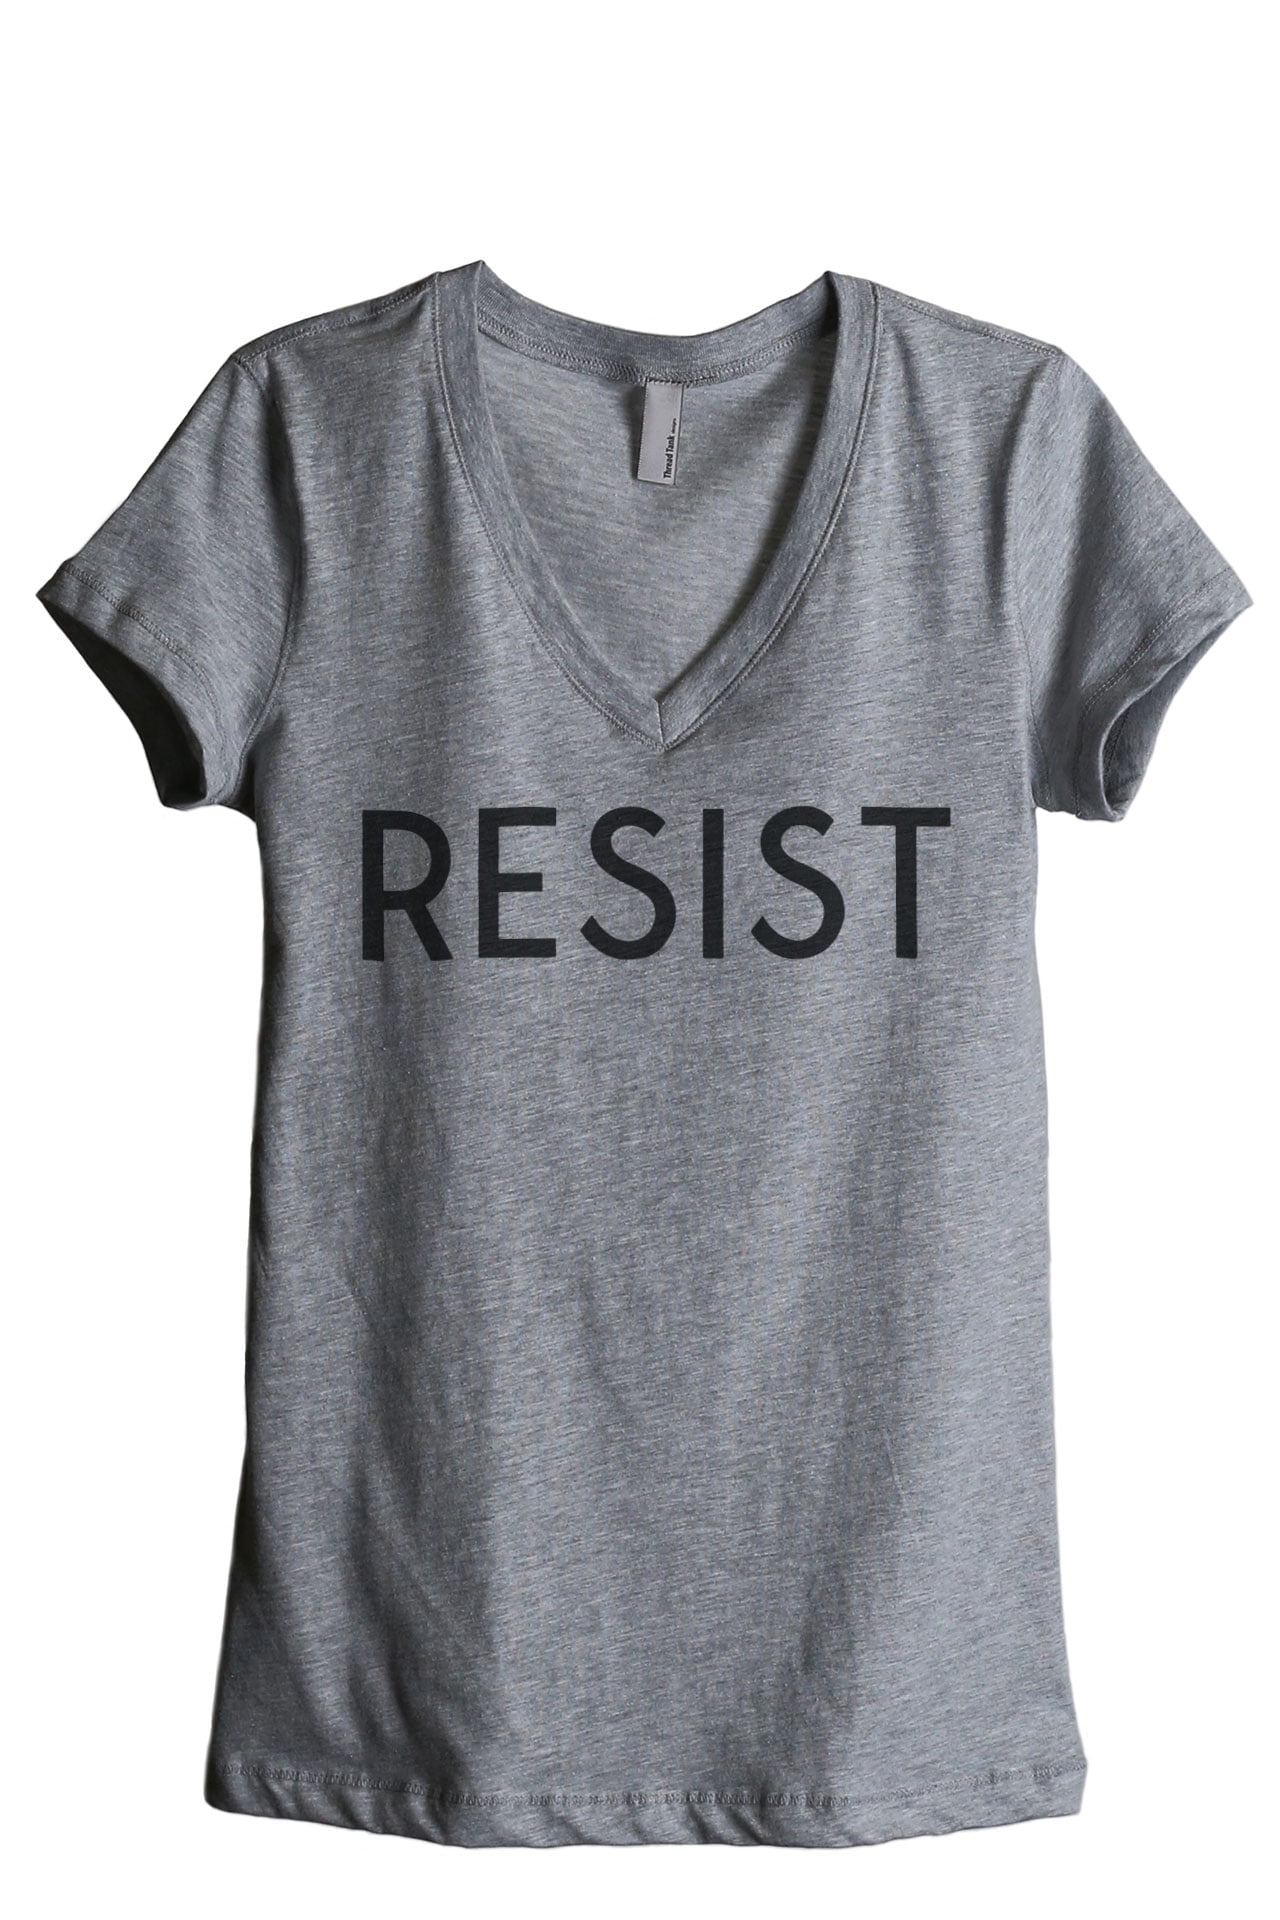 Thread Tank Resist Women's Relaxed V-Neck T-Shirt Tee Heather Grey X ...